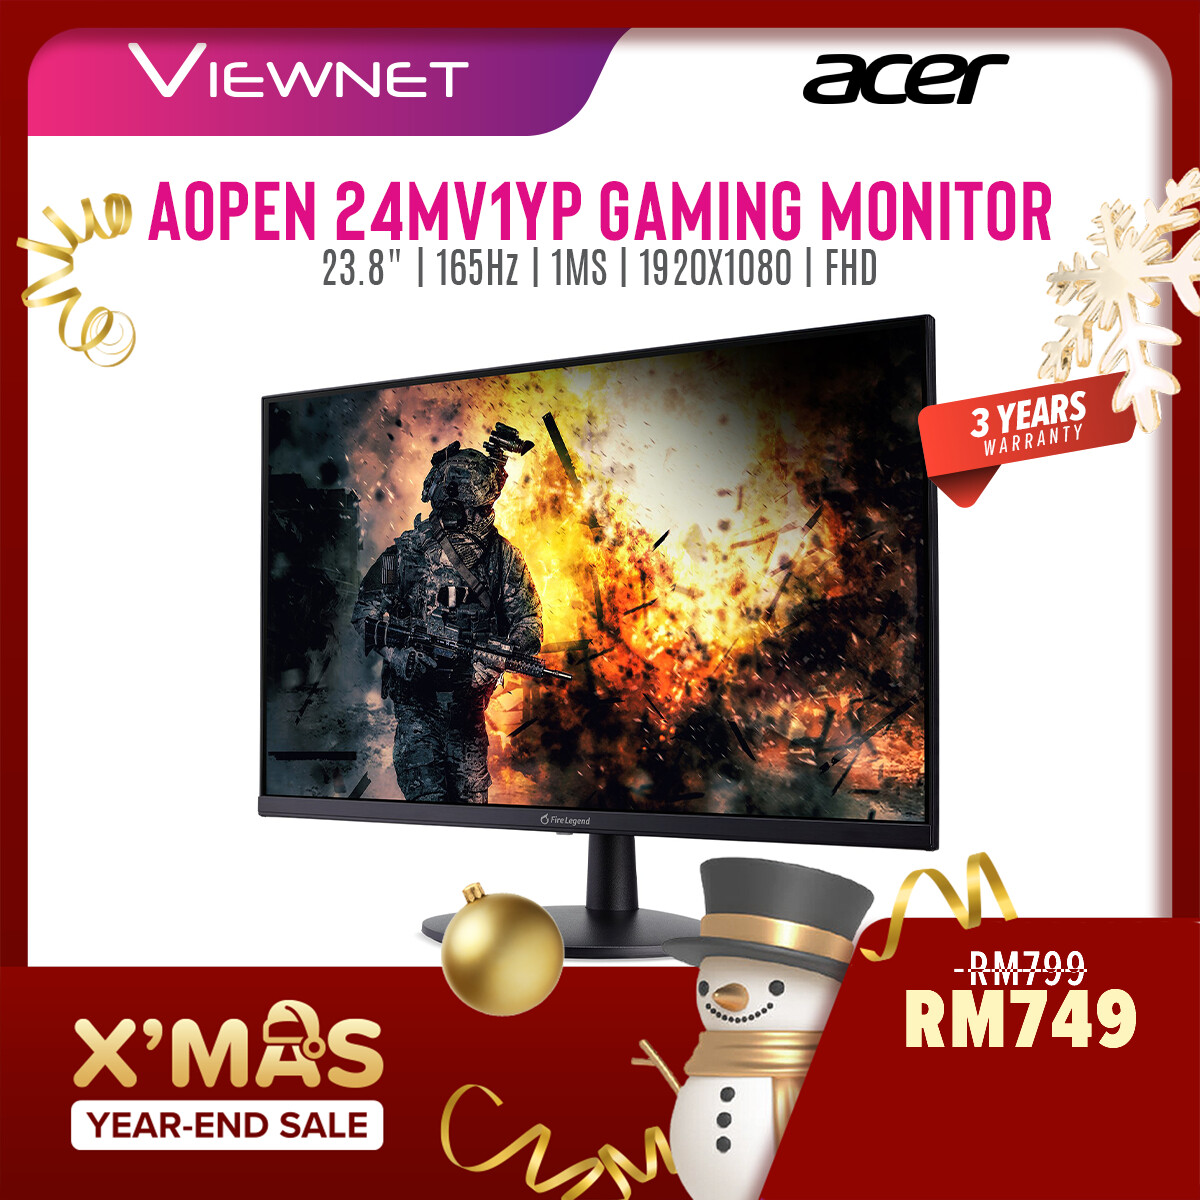 Acer AOpen 24MV1Y P Flat 23.8